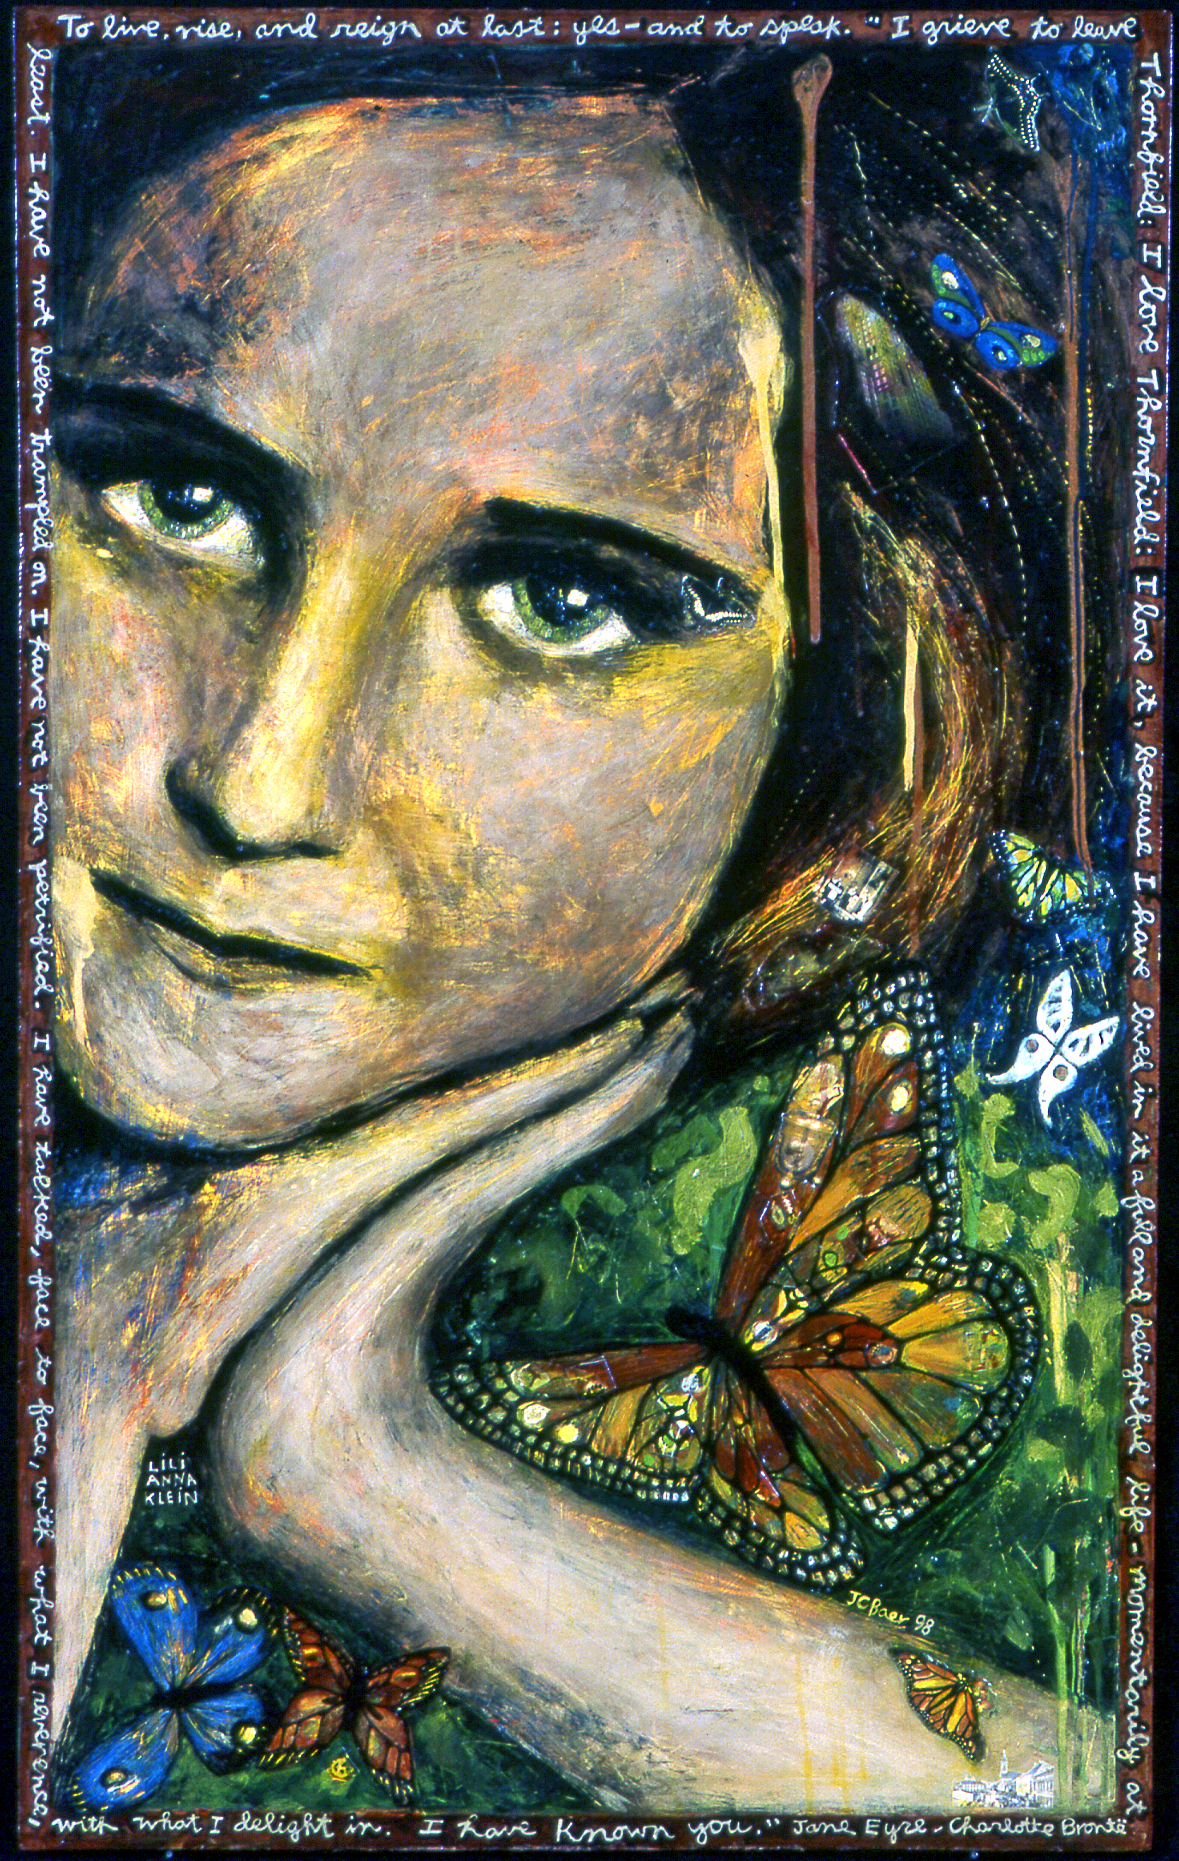 Lili Anna Klein, 1999, 50 x 32, mixed media on wood panel, Sold